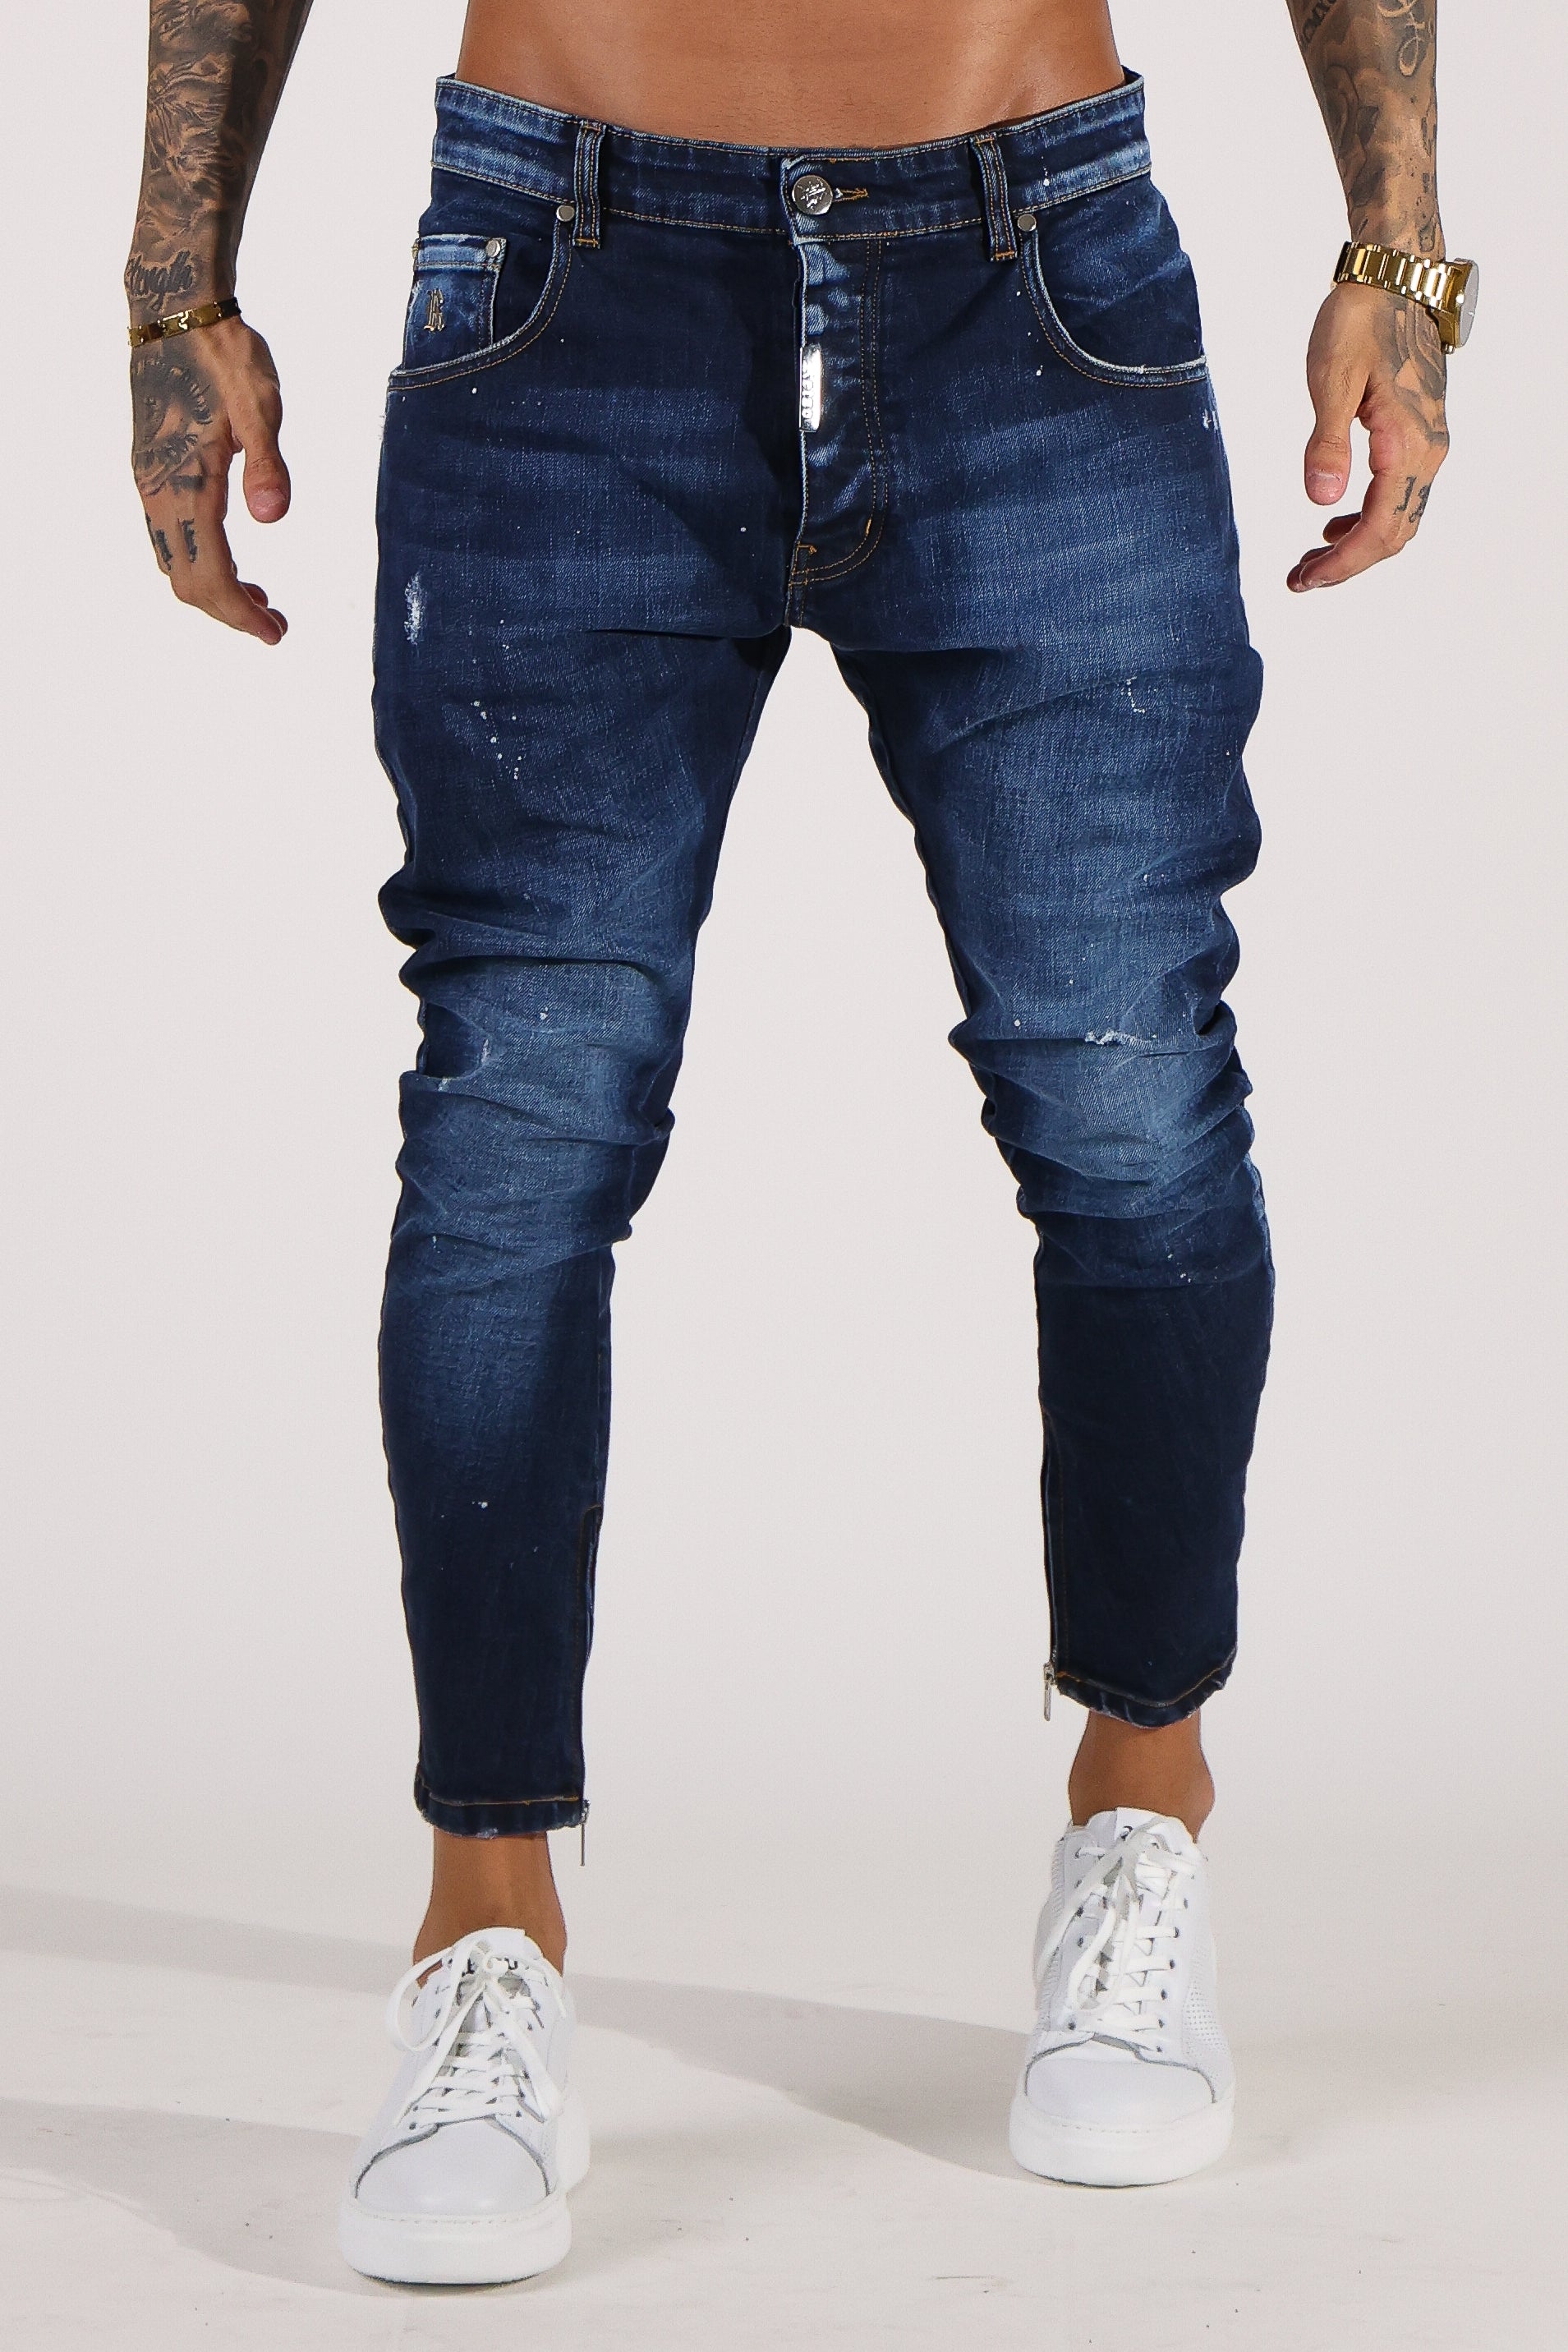 Sardenha Jeans